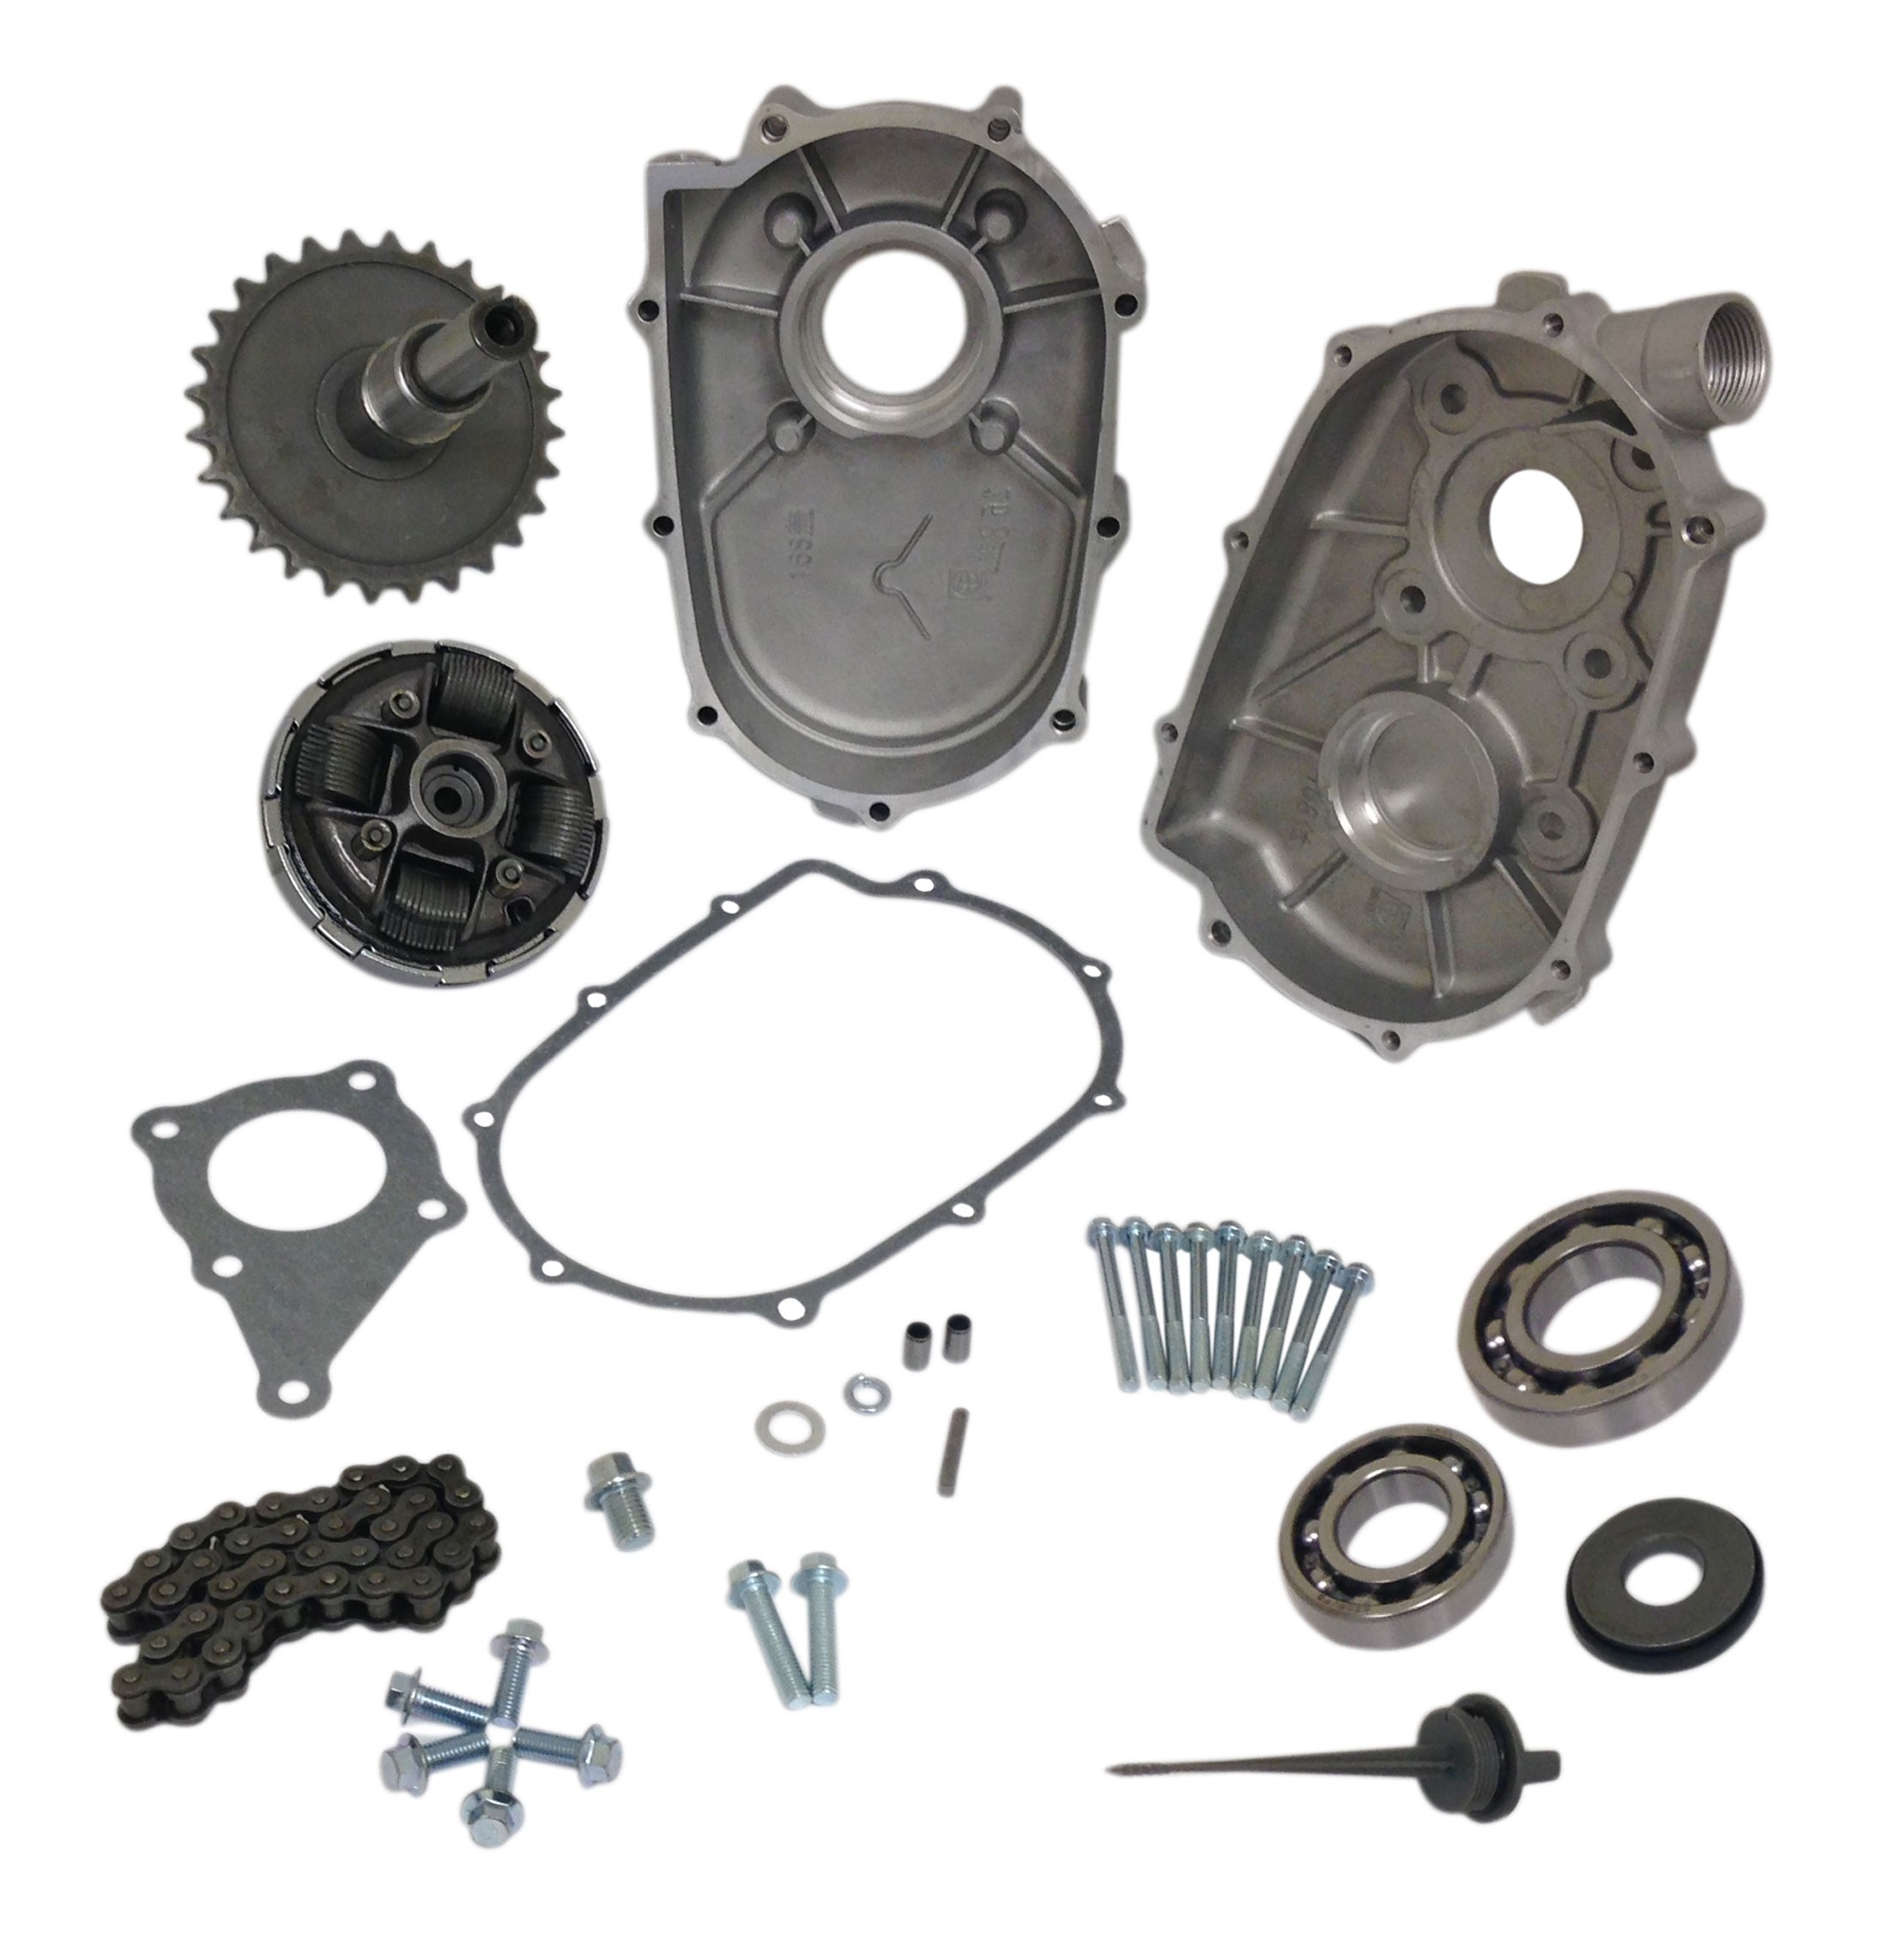 Honda Crf230f Parts Diagram 2 1 Reduction Gearbox Kit for Honda 6 5hp Gx200 Engine 20mm Of Honda Crf230f Parts Diagram